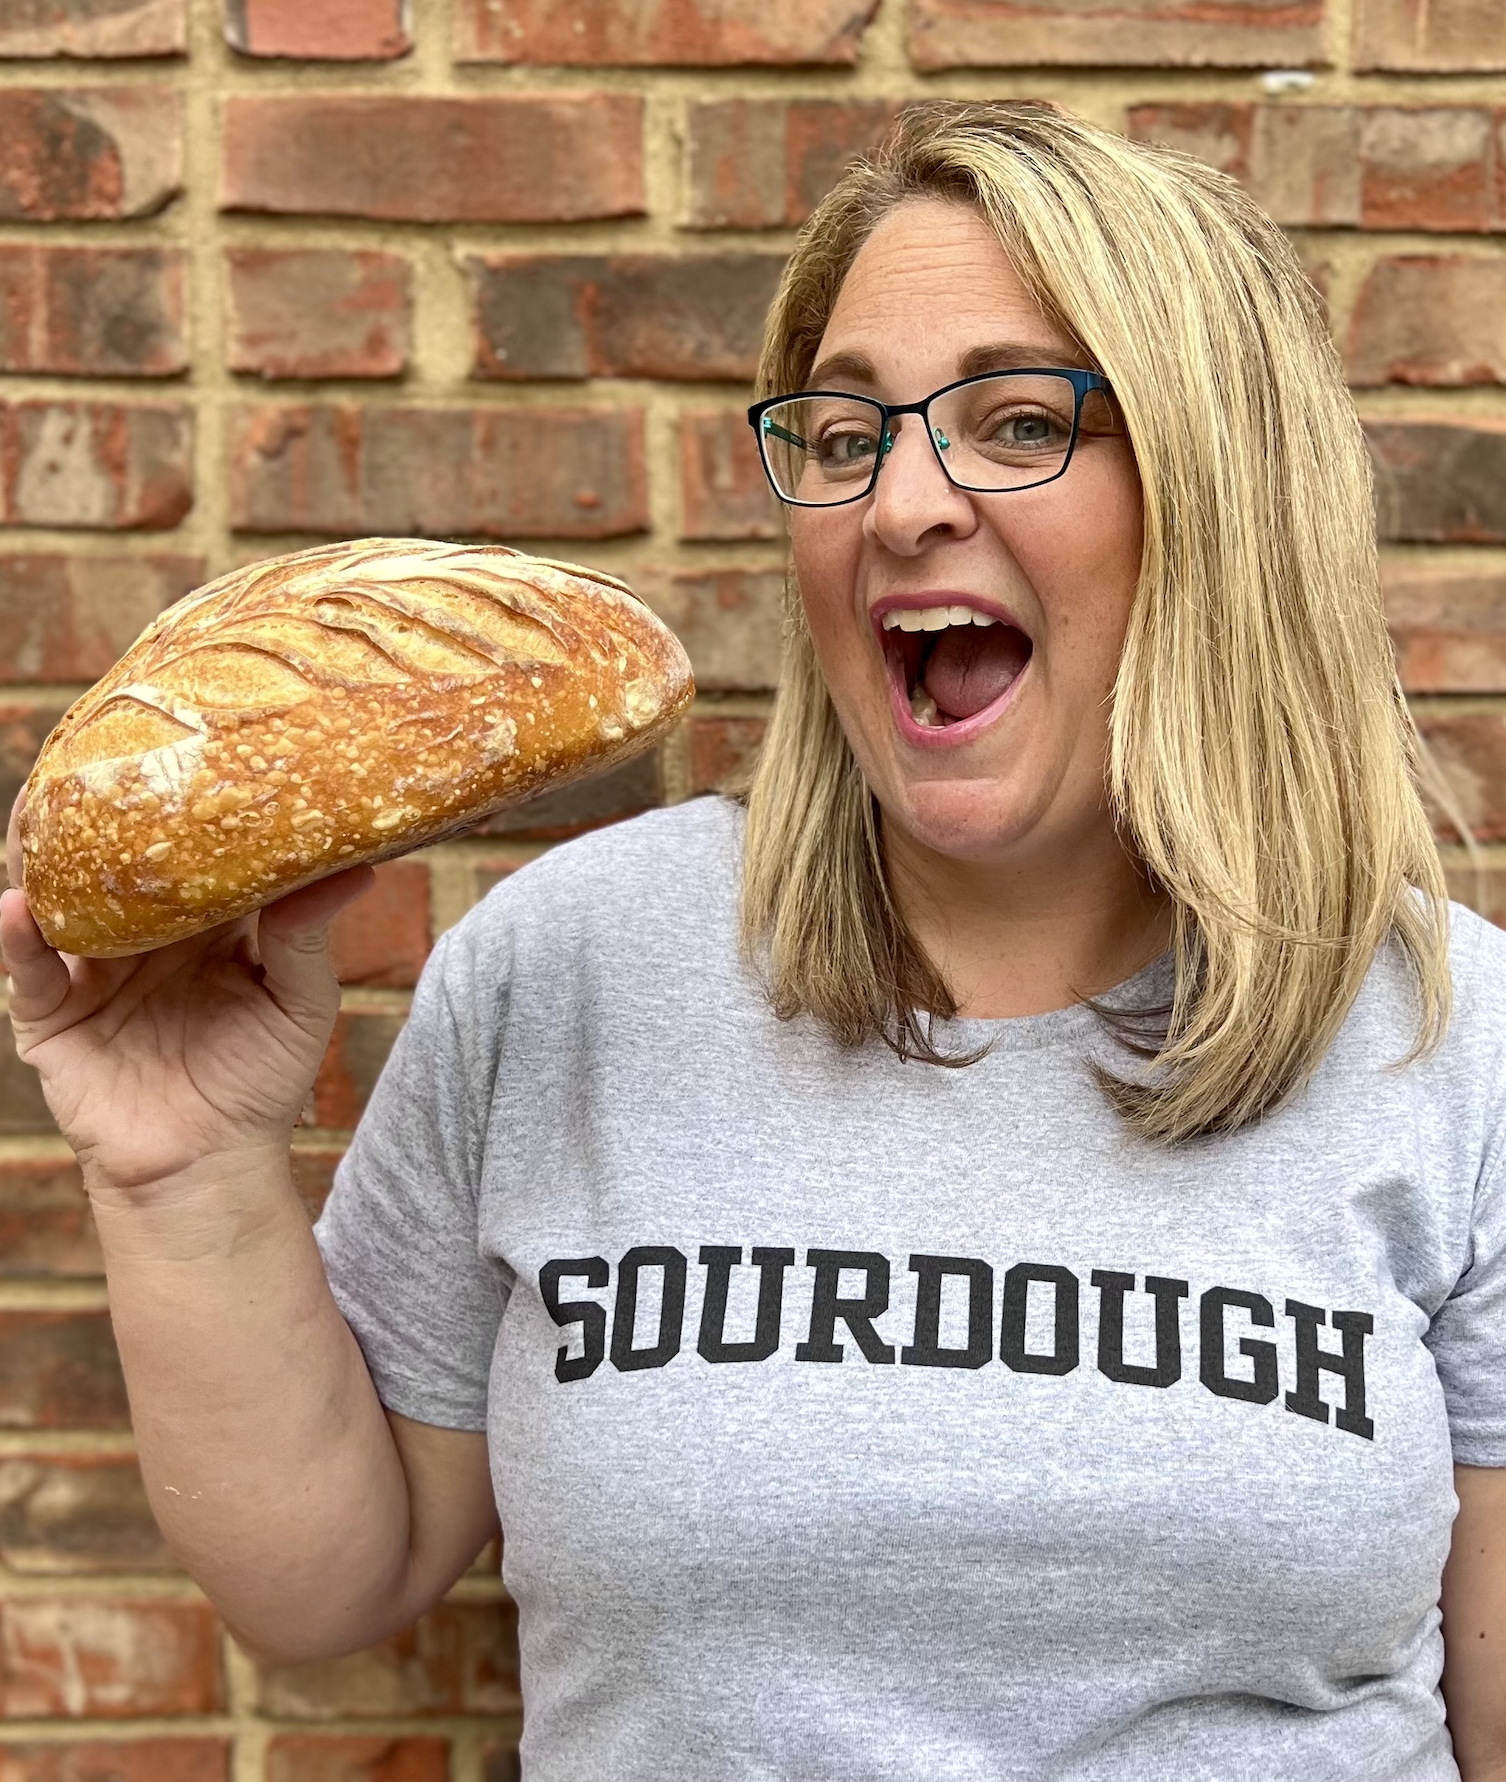 sourdough bread baker recipes classes influencer on social media @amybakesbread in Kentucky United States 2